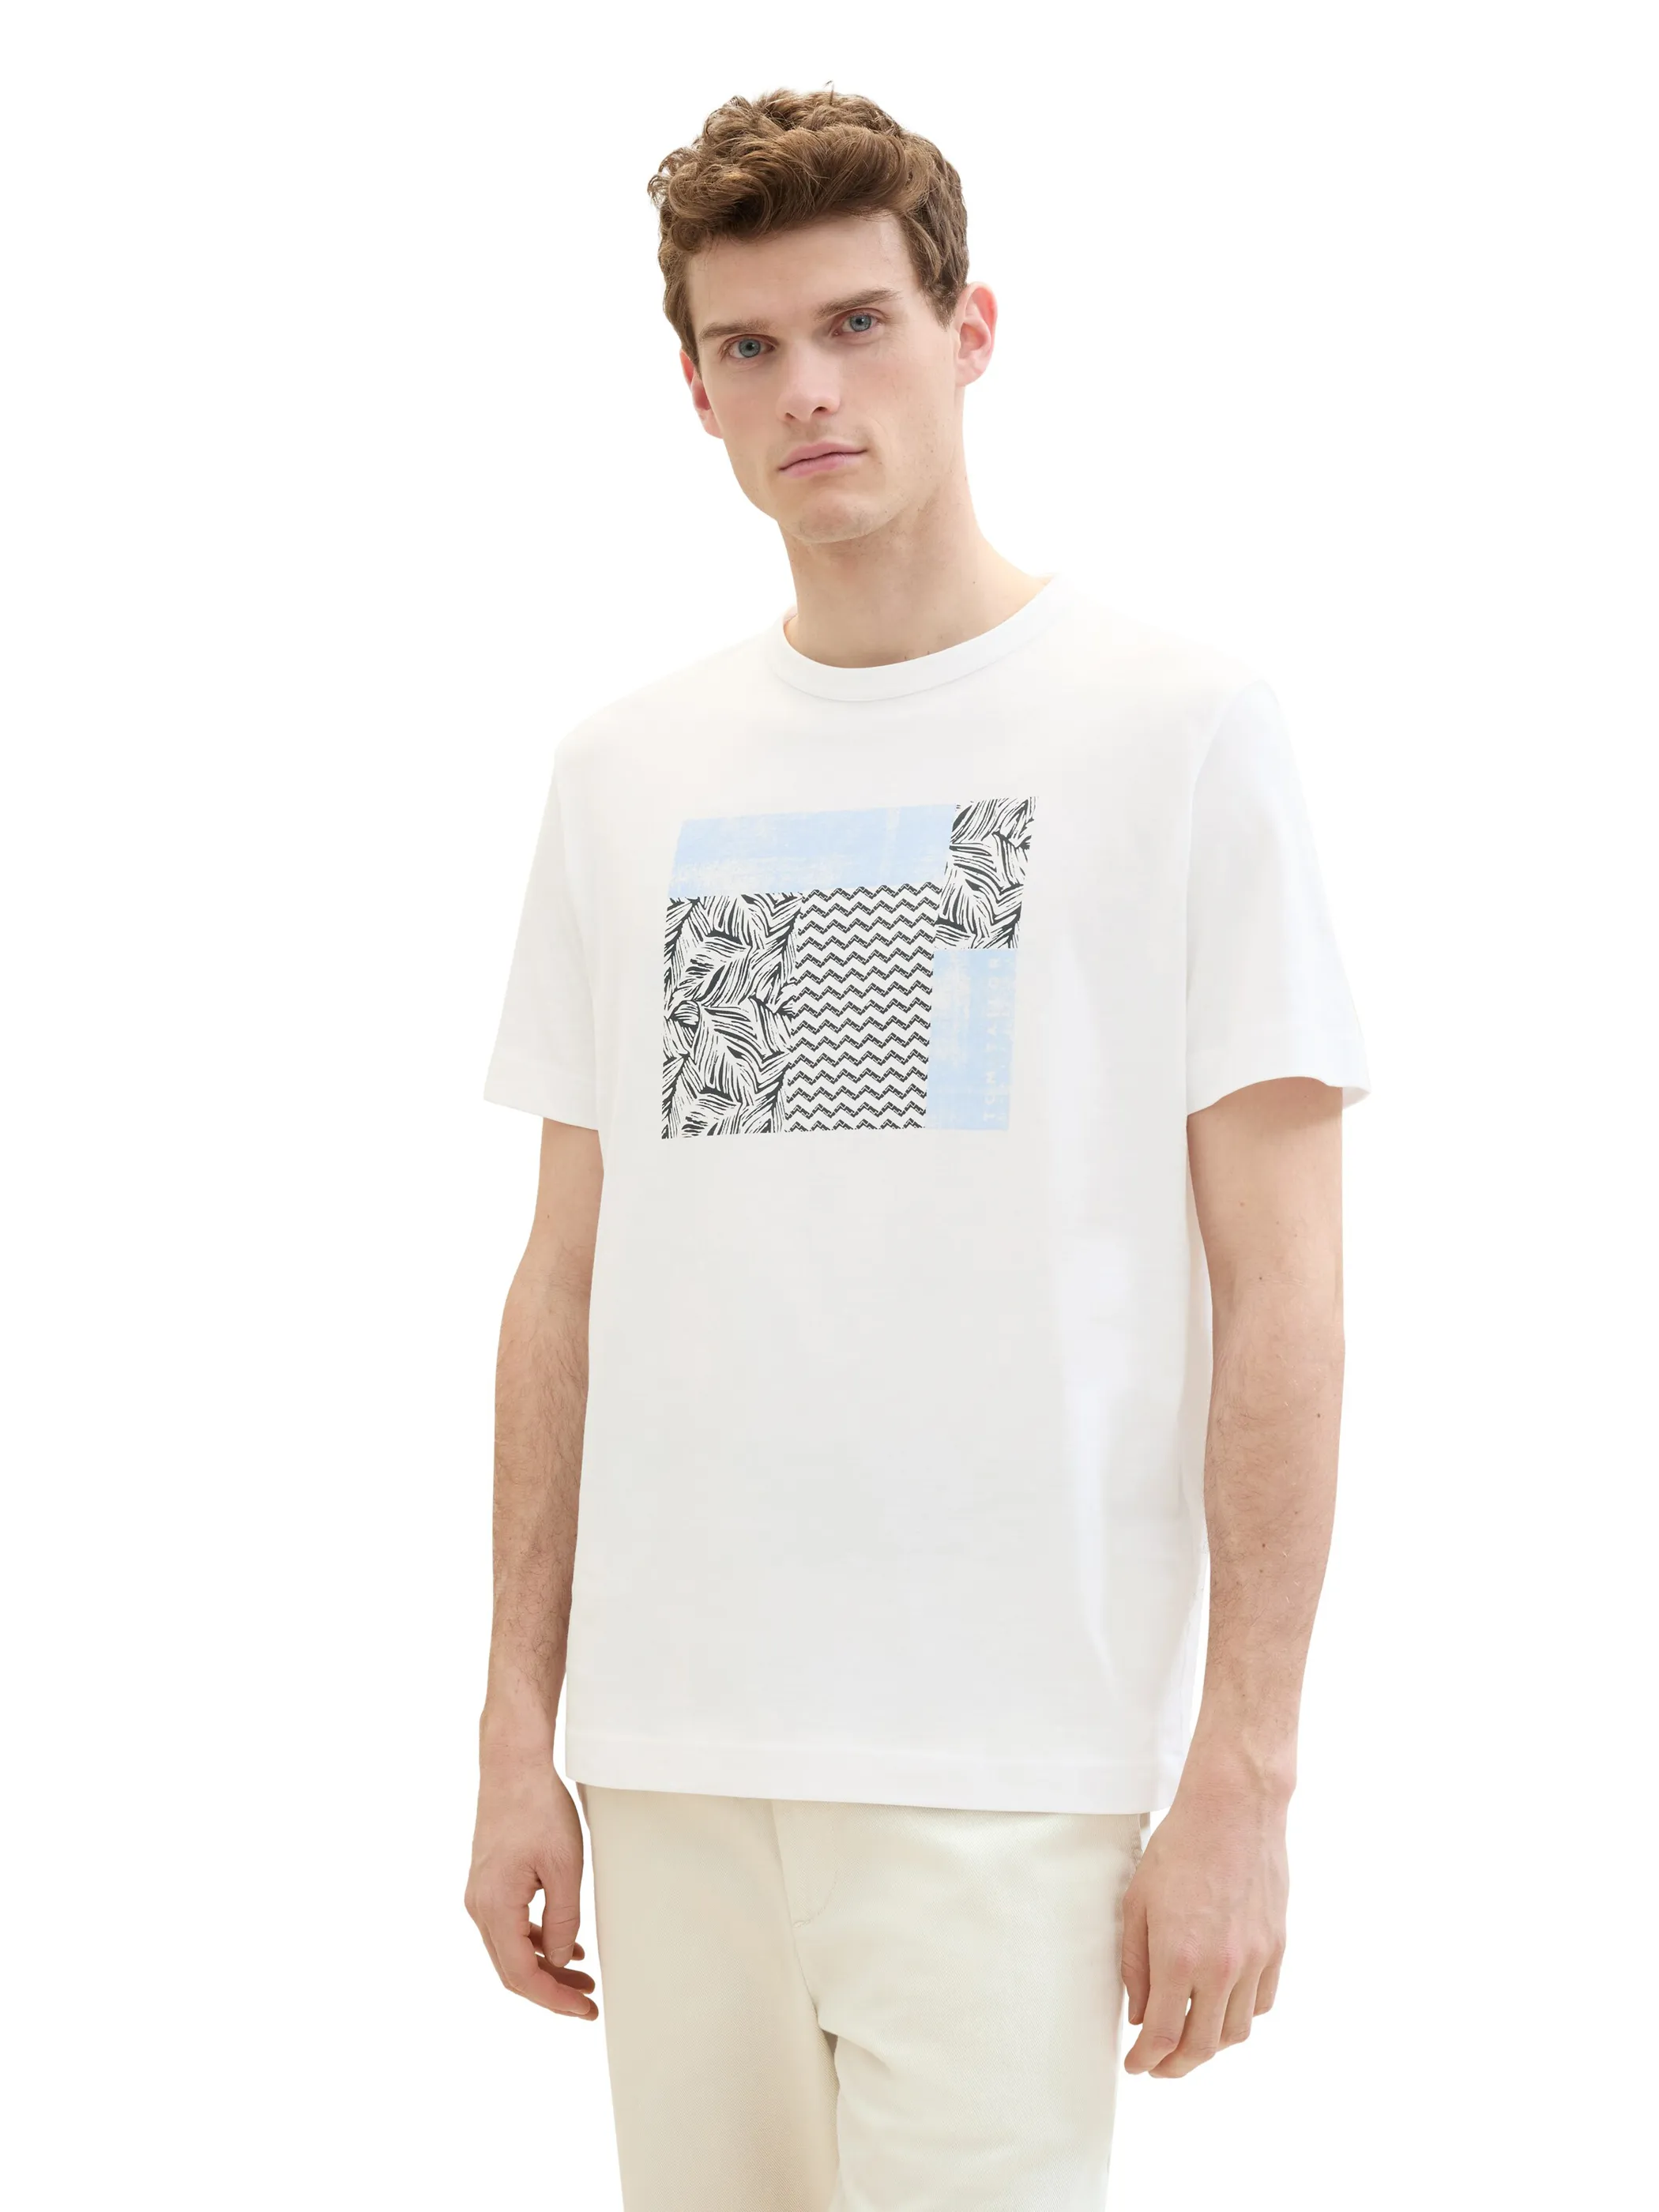 Tom Tailor 1041793 printed t-shirt Weiß 895690 20000 2